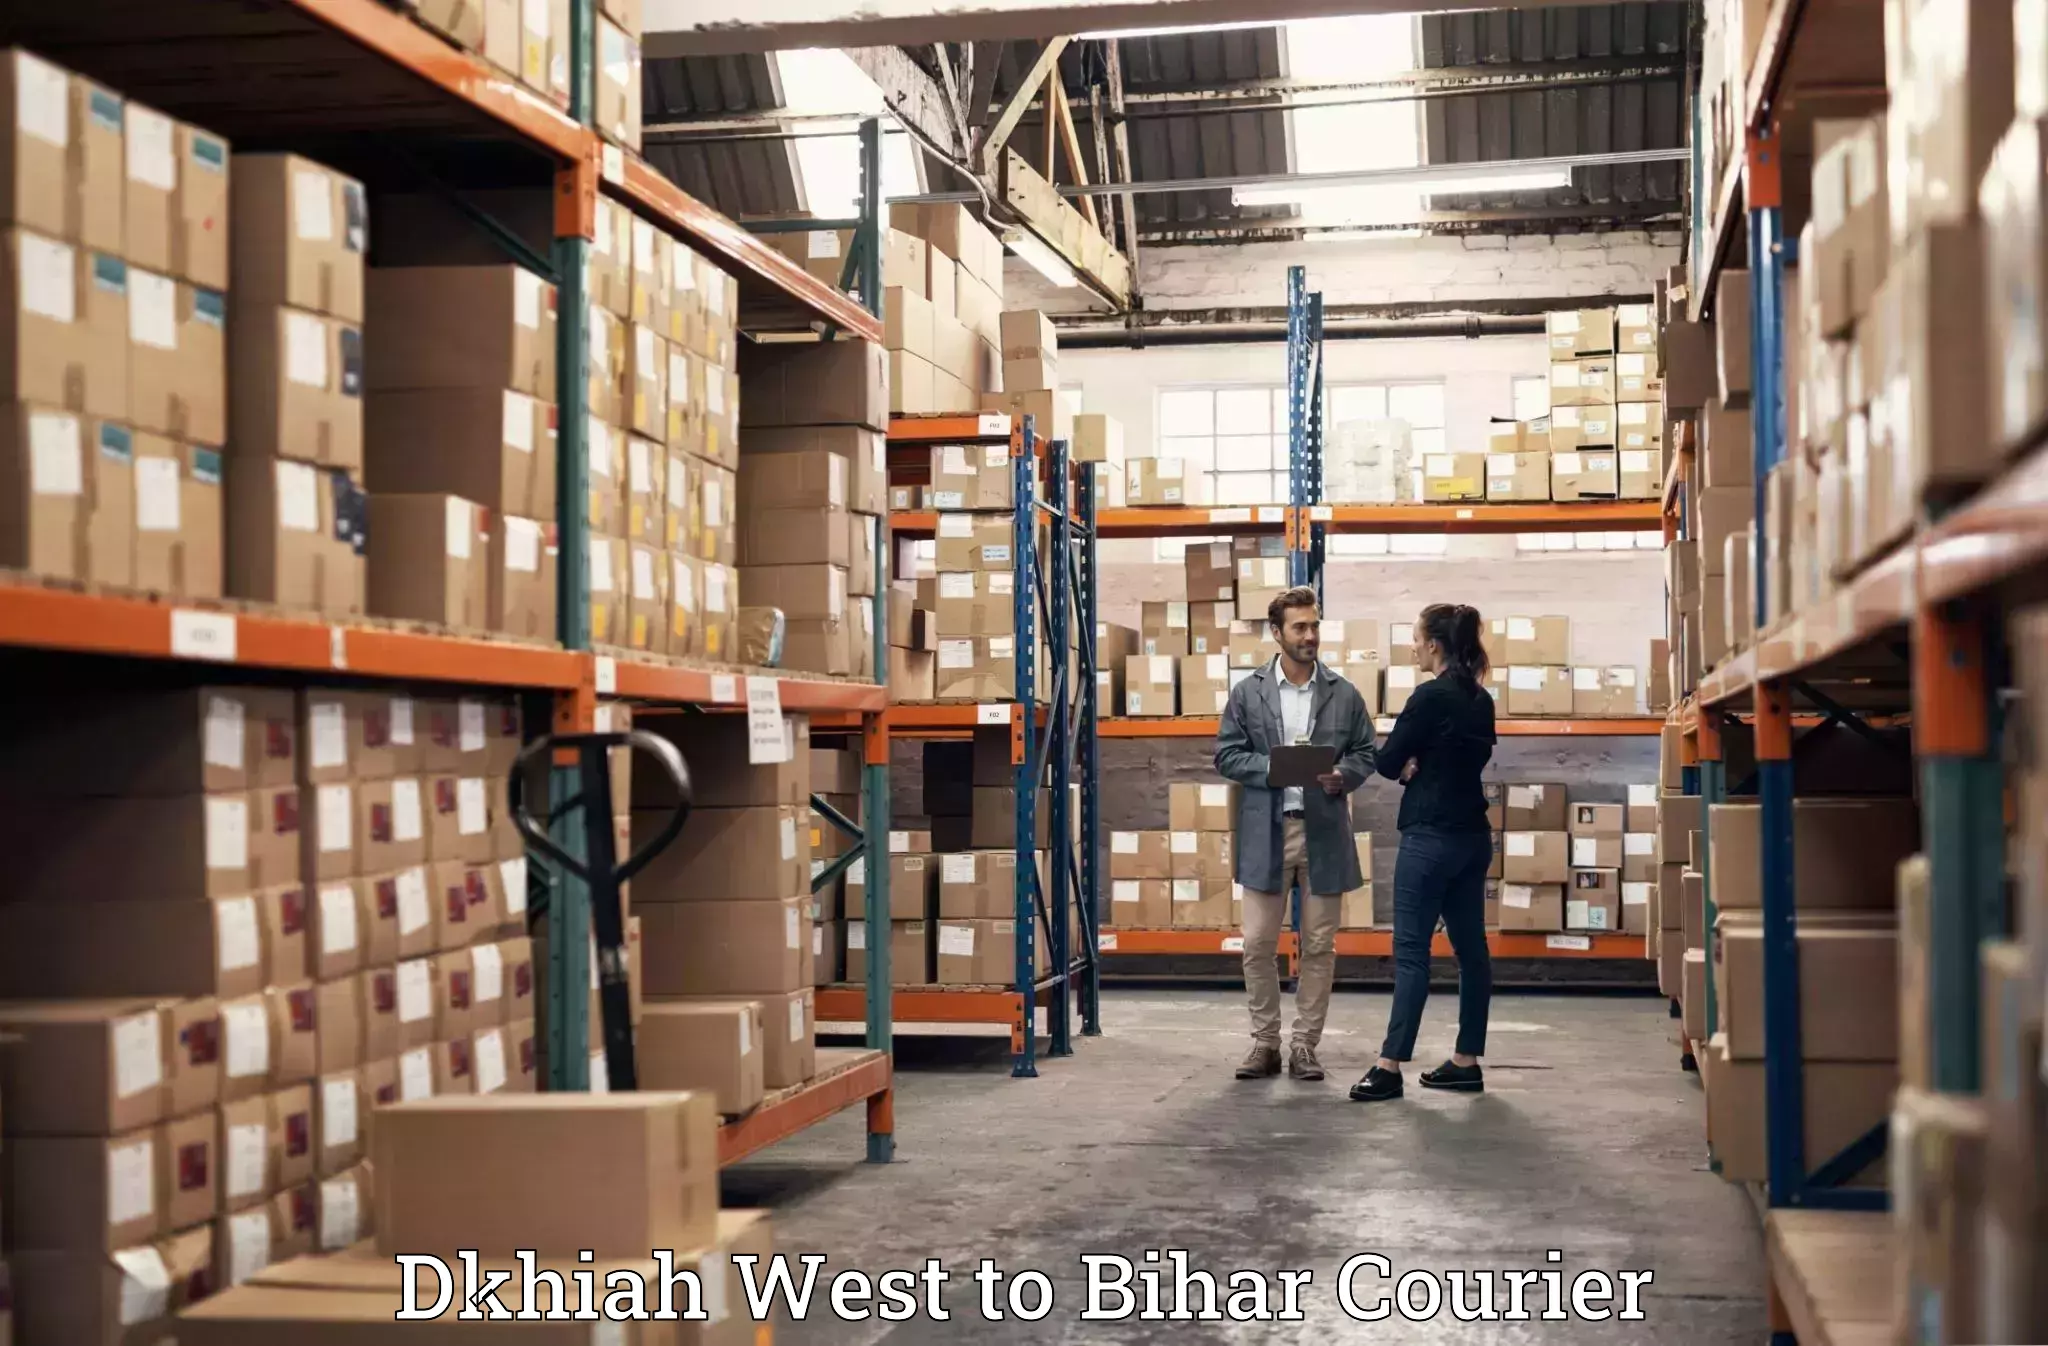 Baggage transport network Dkhiah West to Dighwara